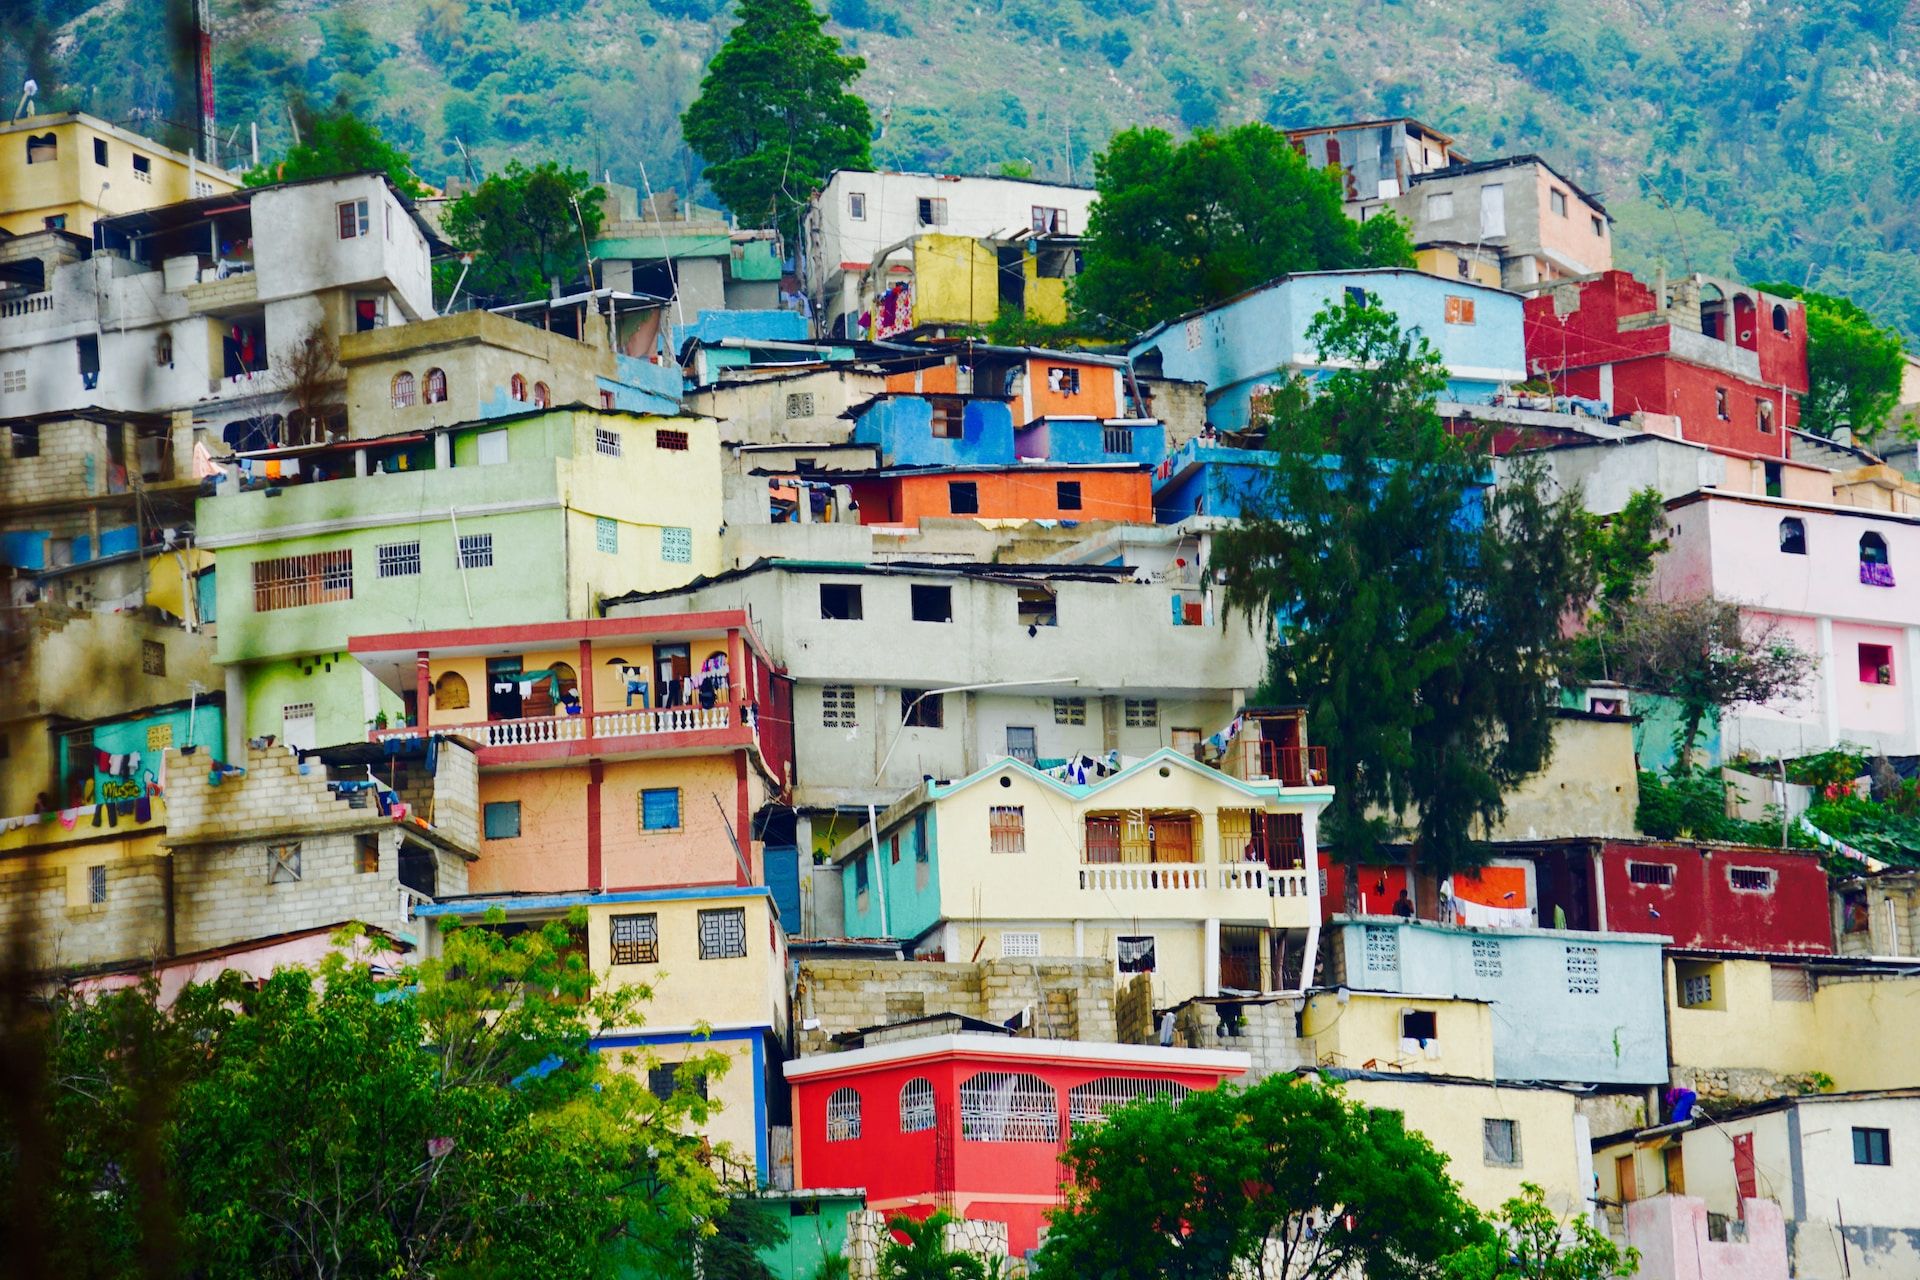 Colorful mountainside houses in Port-Au-Prince, Haiti